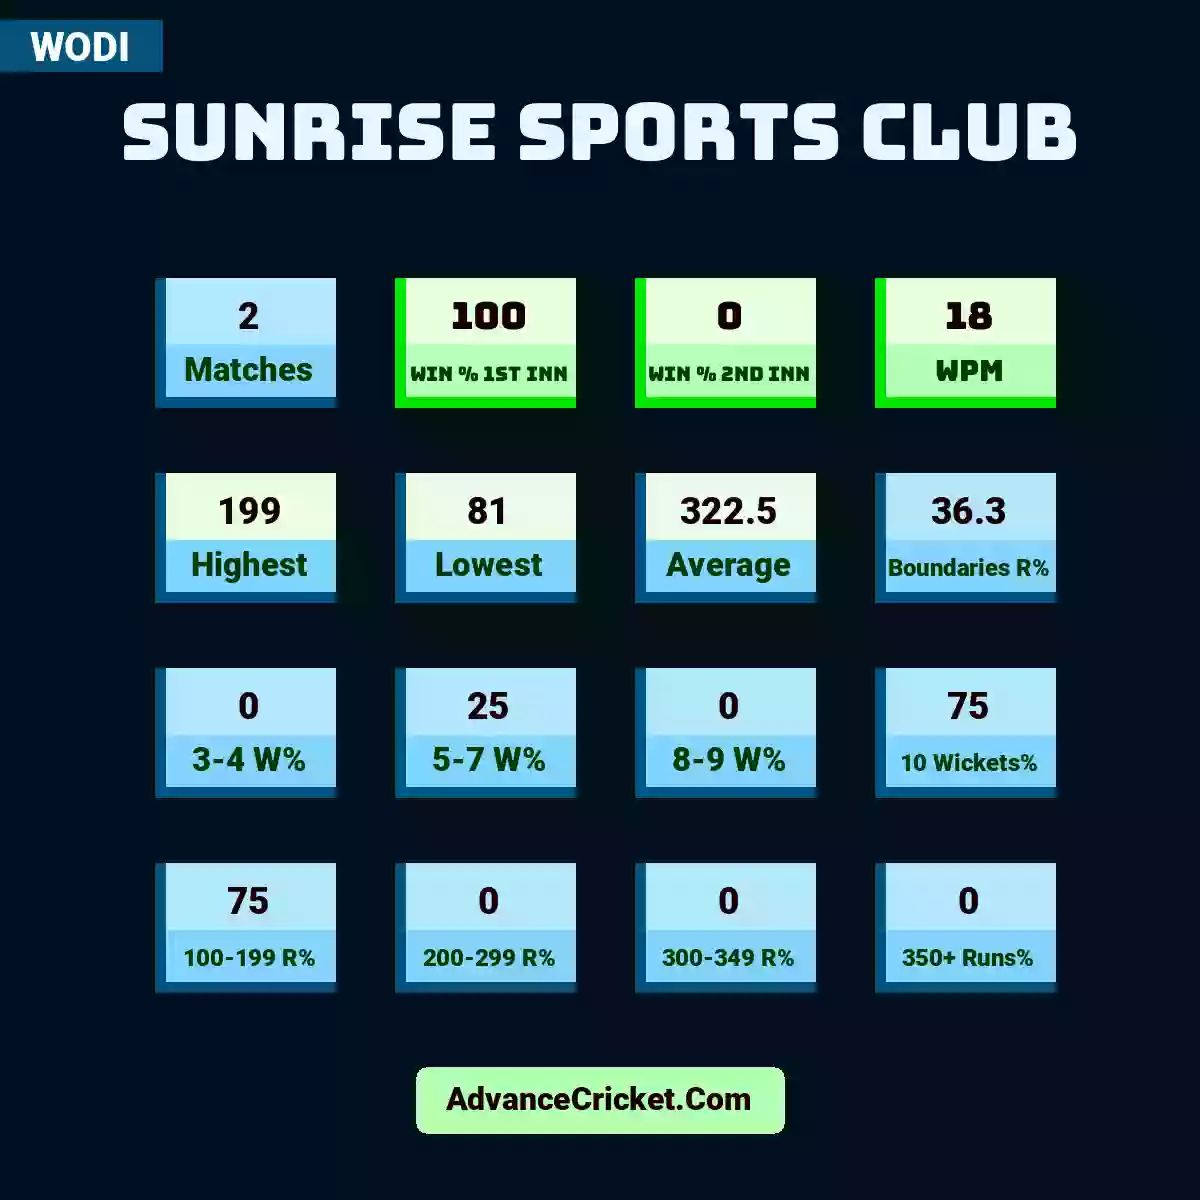 Image showing Sunrise Sports Club with Matches: 2, Win % 1st Inn: 100, Win % 2nd Inn: 0, WPM: 18, Highest: 199, Lowest: 81, Average: 322.5, Boundaries R%: 36.3, 3-4 W%: 0, 5-7 W%: 25, 8-9 W%: 0, 10 Wickets%: 75, 100-199 R%: 75, 200-299 R%: 0, 300-349 R%: 0, 350+ Runs%: 0.